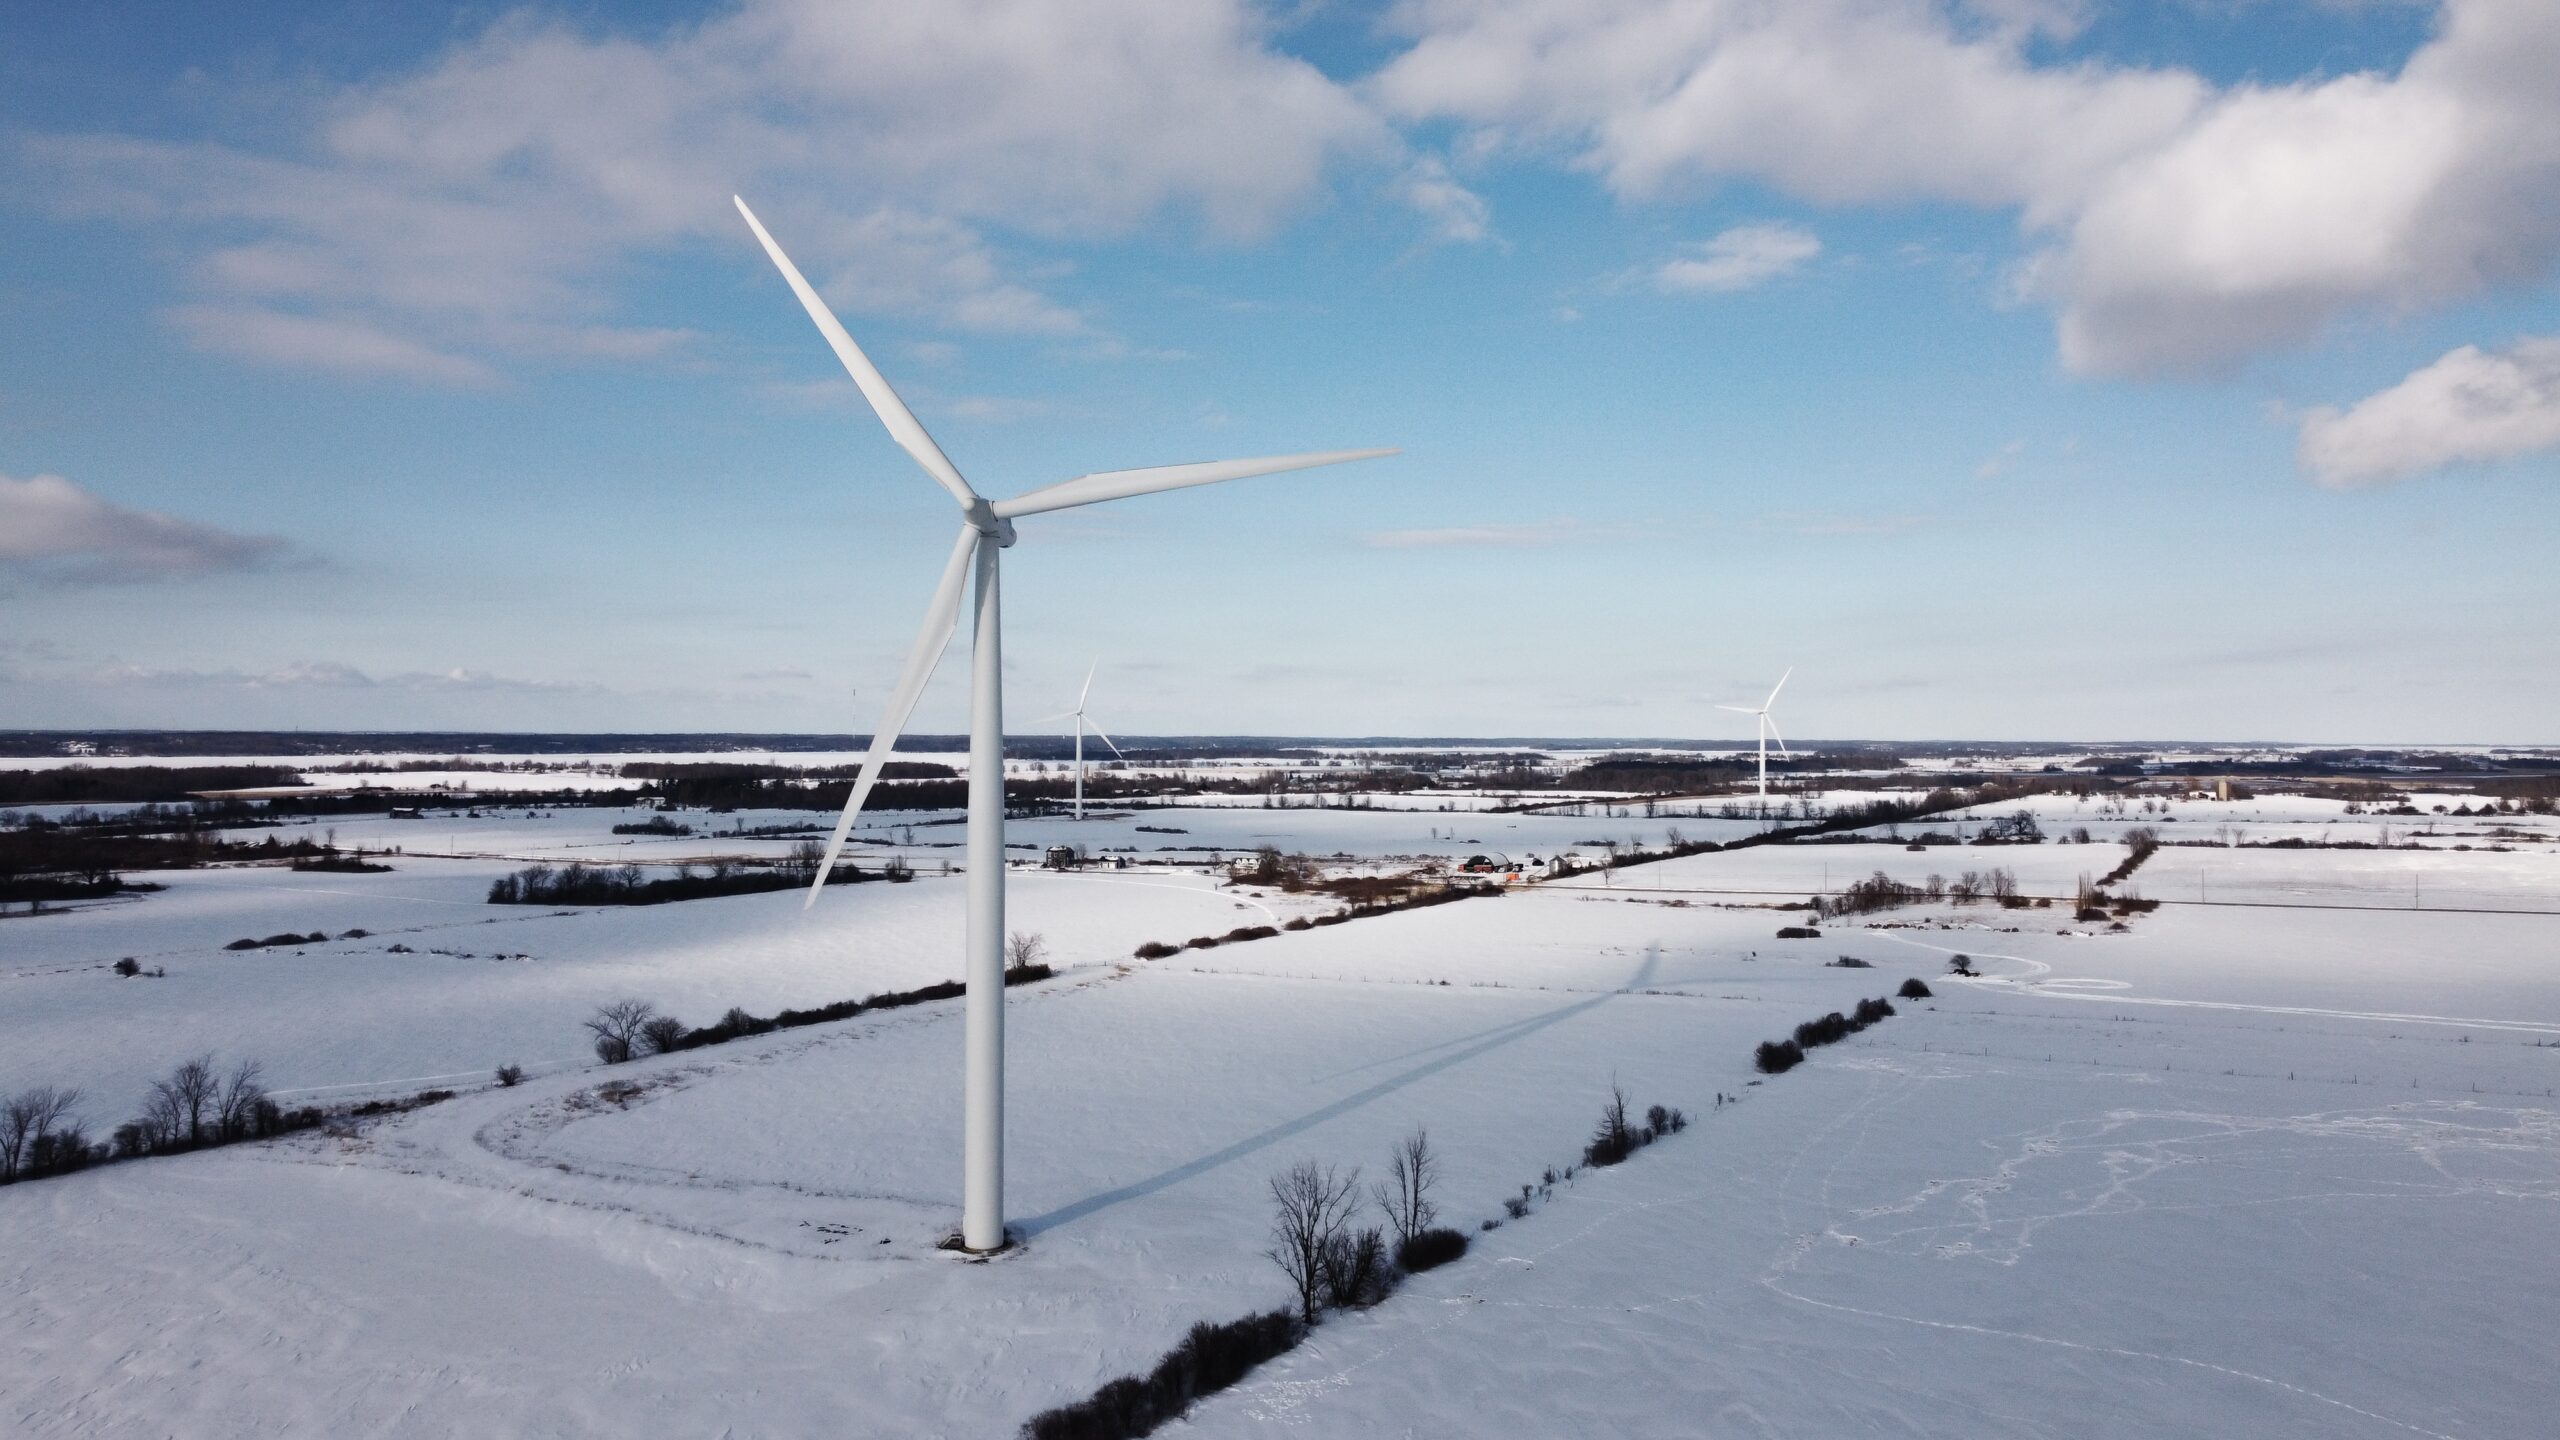 Wind turbine on snow covered ground under blue sky